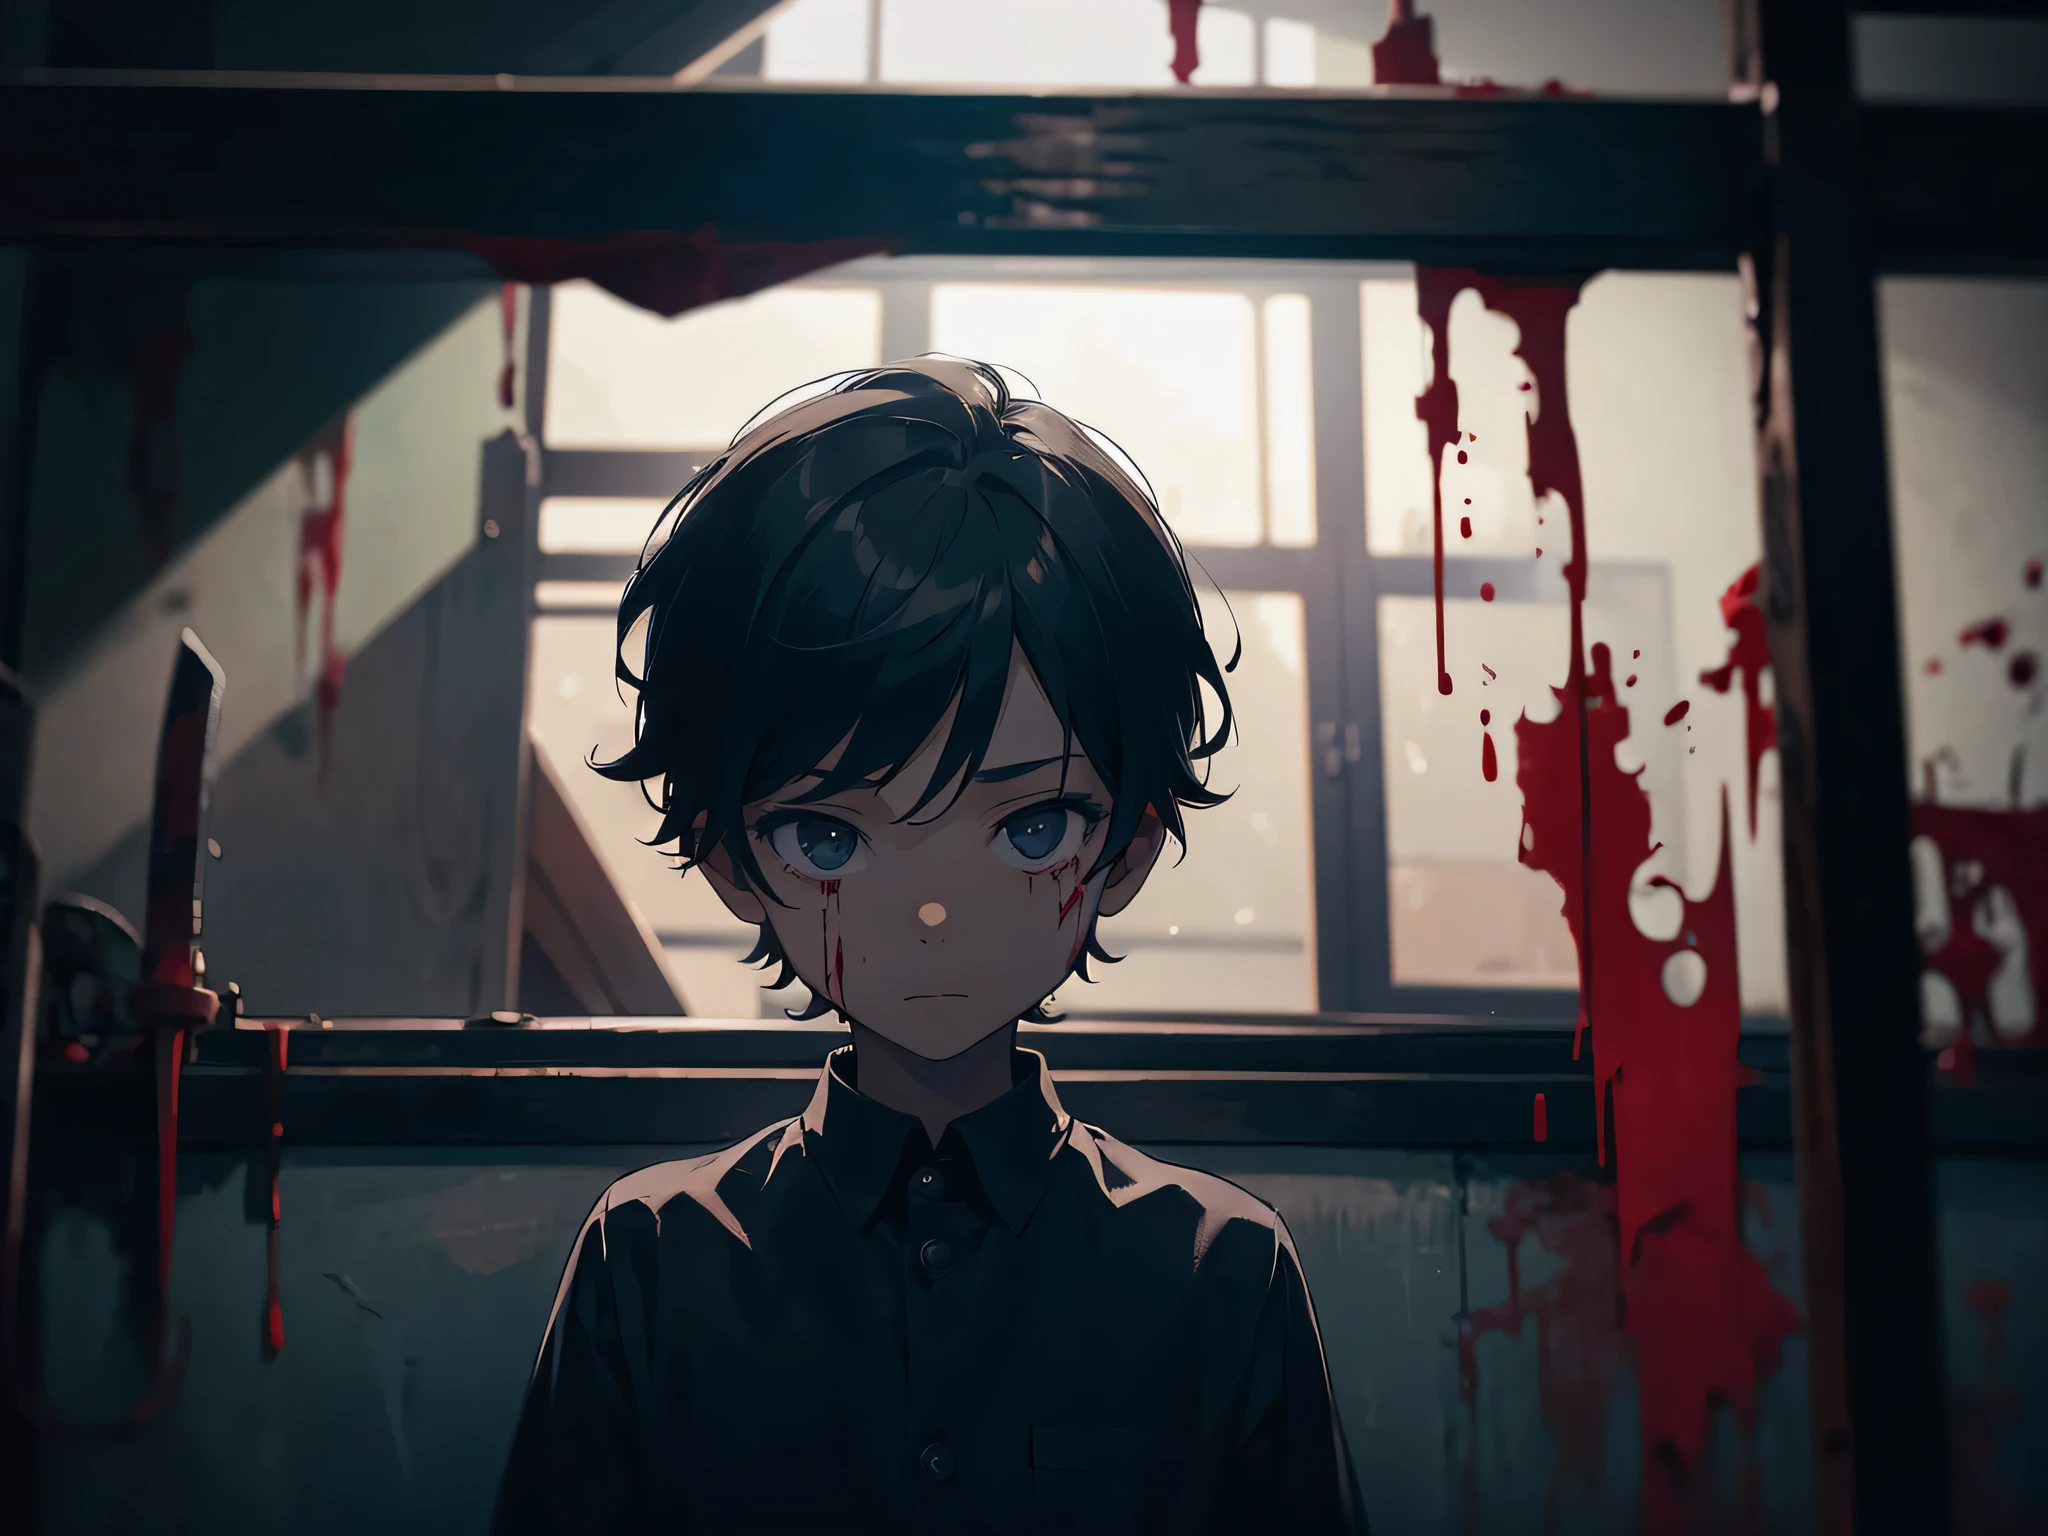 a boy，five-year-boy，alone，short hair，black hair，wearing shirt，holding a knife，indoors，Blood跡，Blood，dark style，dark filter